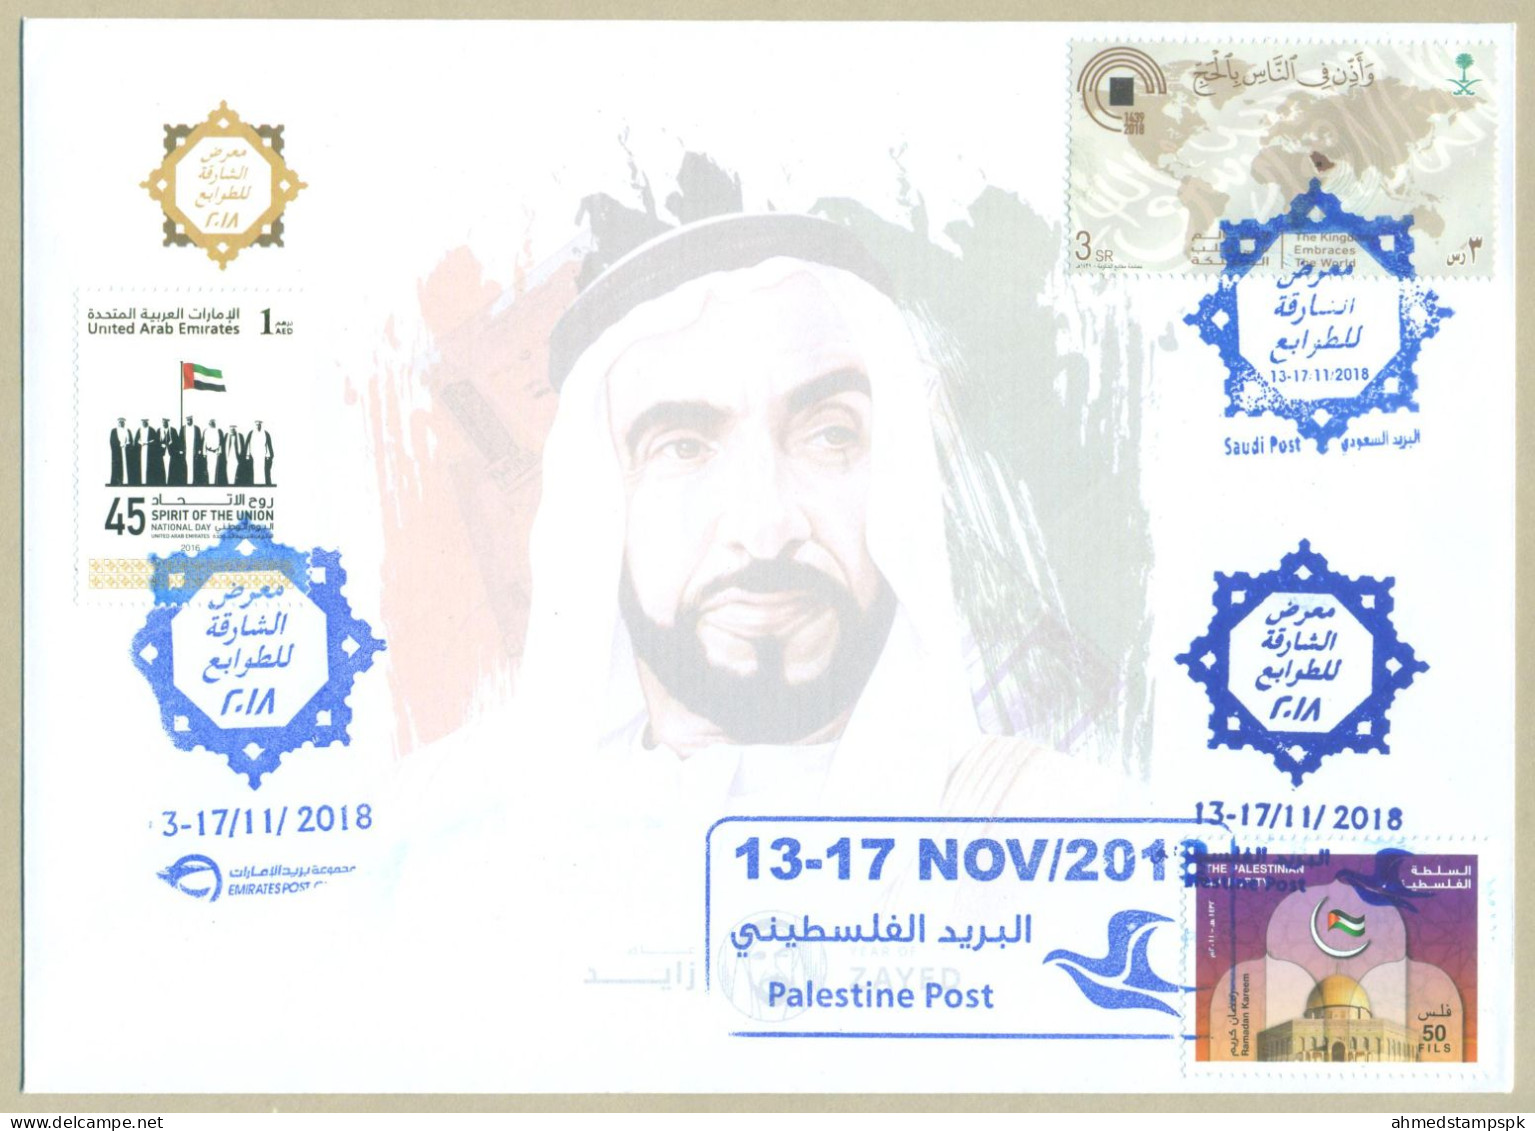 UAE UNITED ARAB EMIRATES SHARJAH EXHIBITION 13 - 17 NOV 2018 HAJJ SAUDI ARABIA PALESTINE NATIONAL DAY - United Arab Emirates (General)